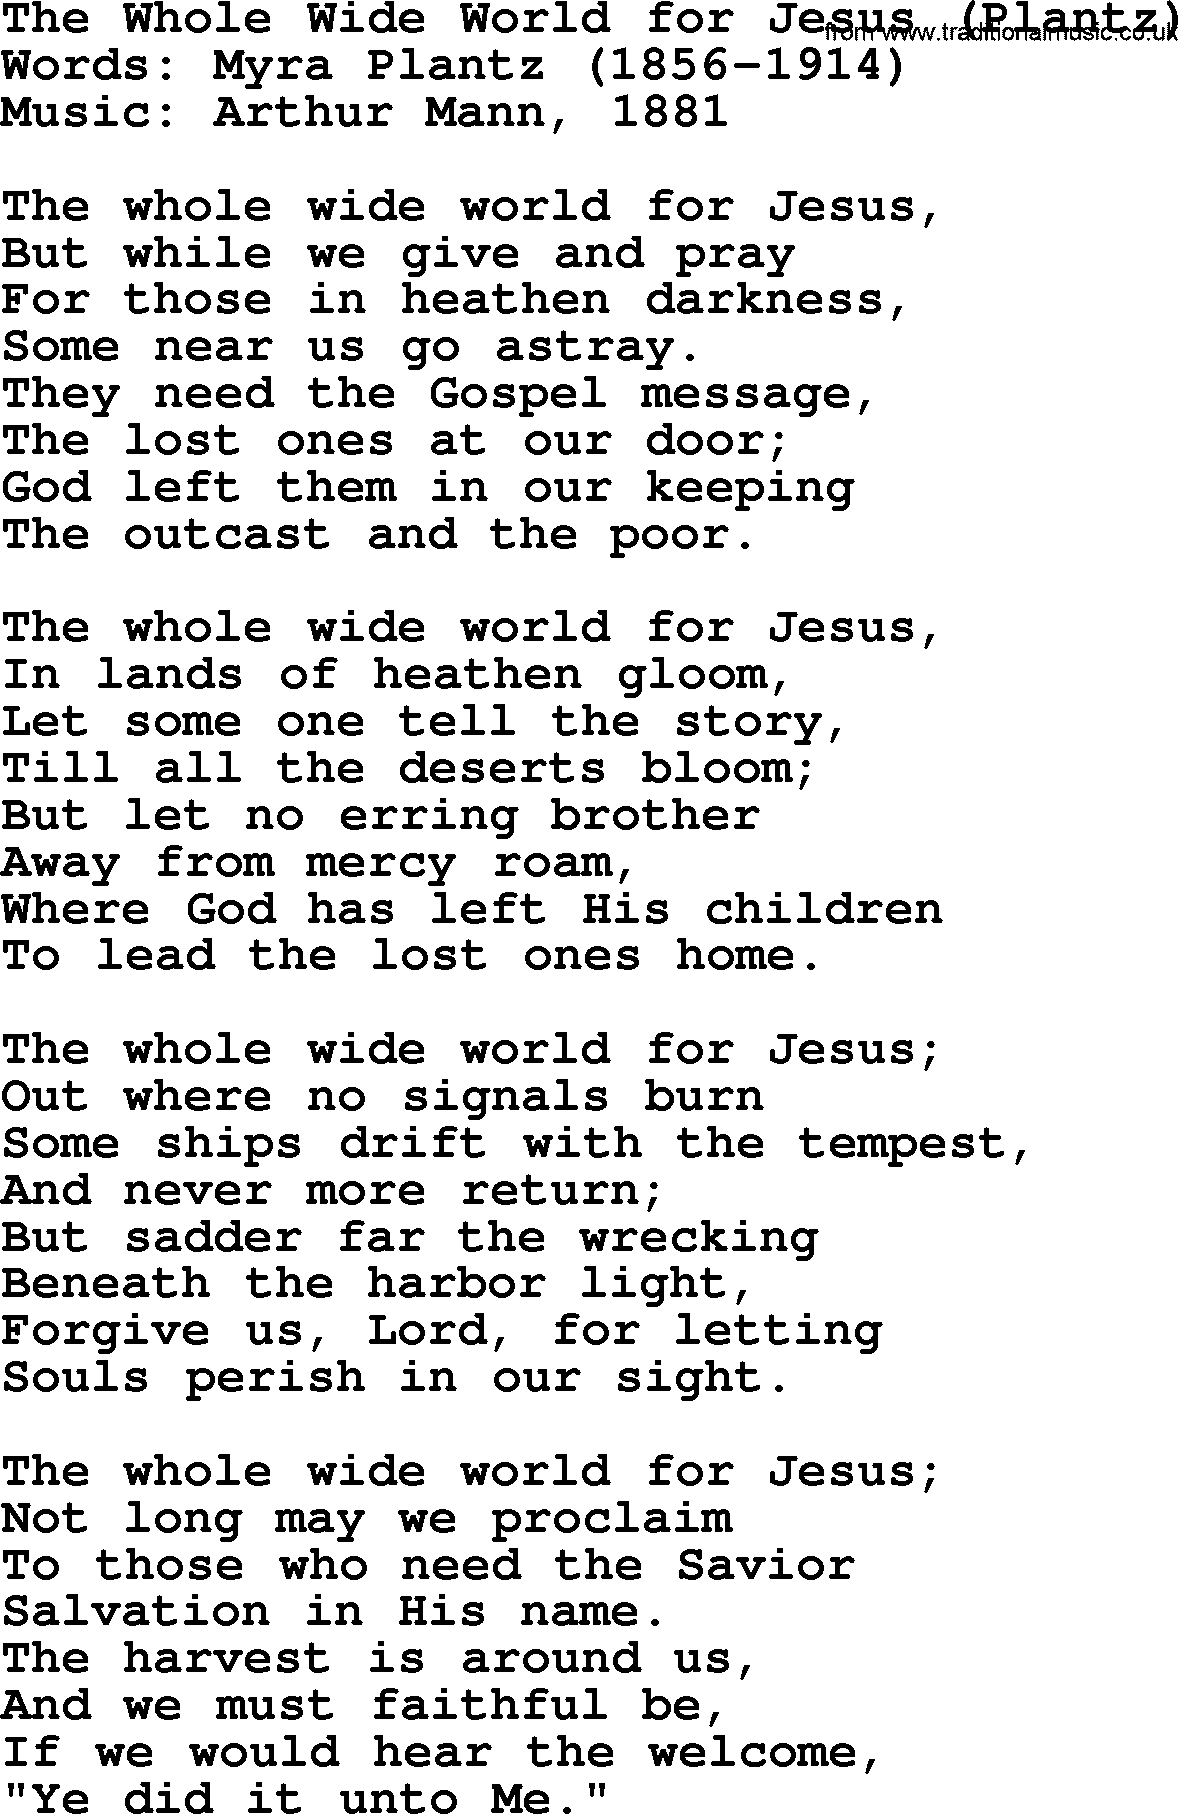 Forgiveness hymns, Hymn: The Whole Wide World For Jesus (Plantz), lyrics with PDF